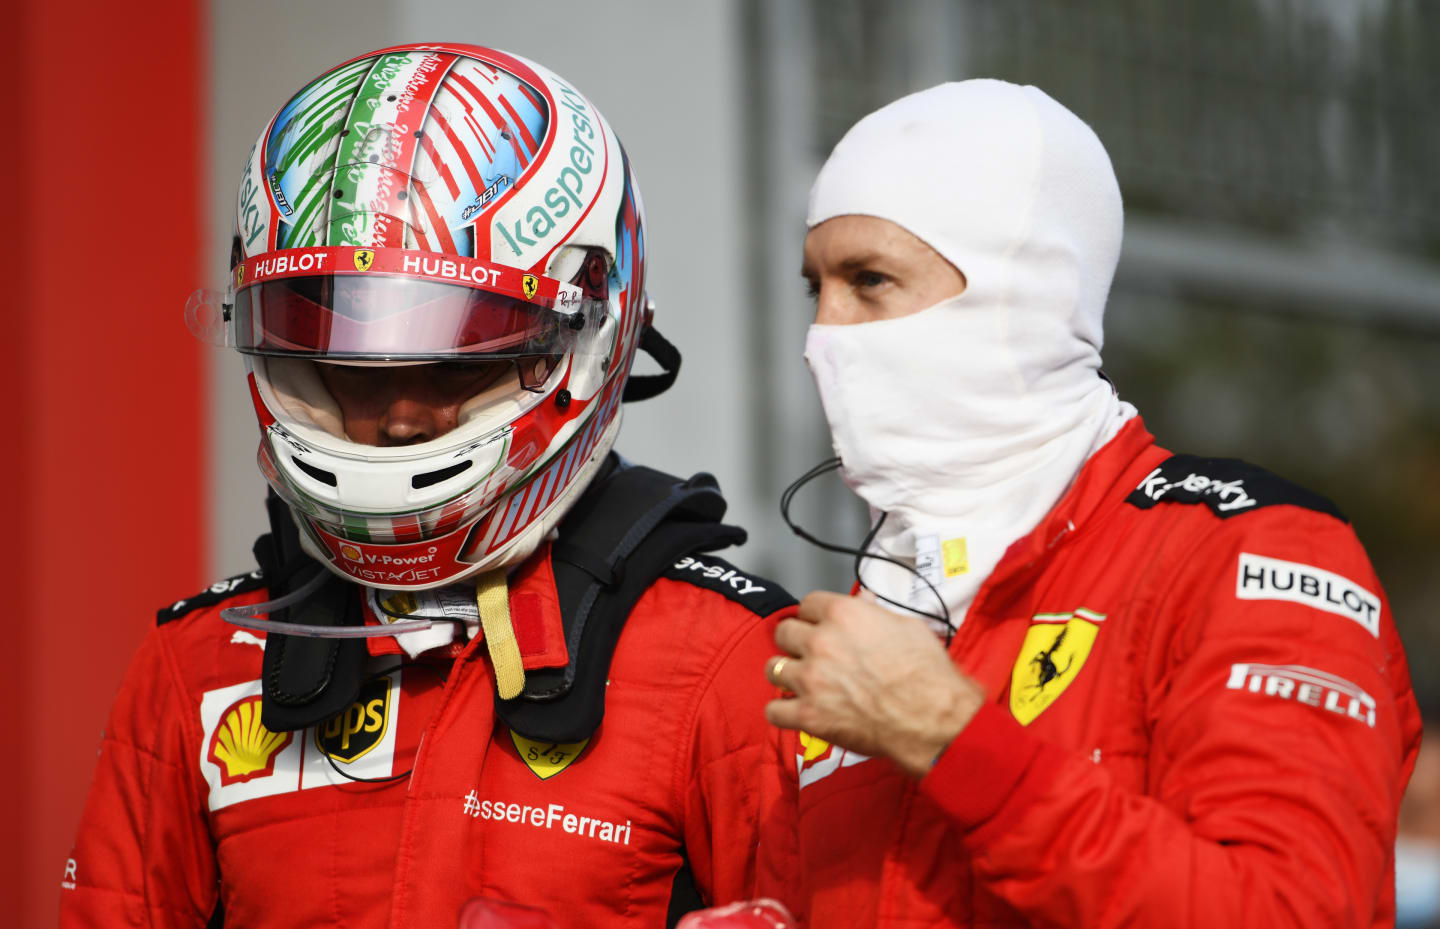 IMOLA, ITALY - NOVEMBER 01: Charles Leclerc of Monaco and Ferrari speaks with teammate Sebastian